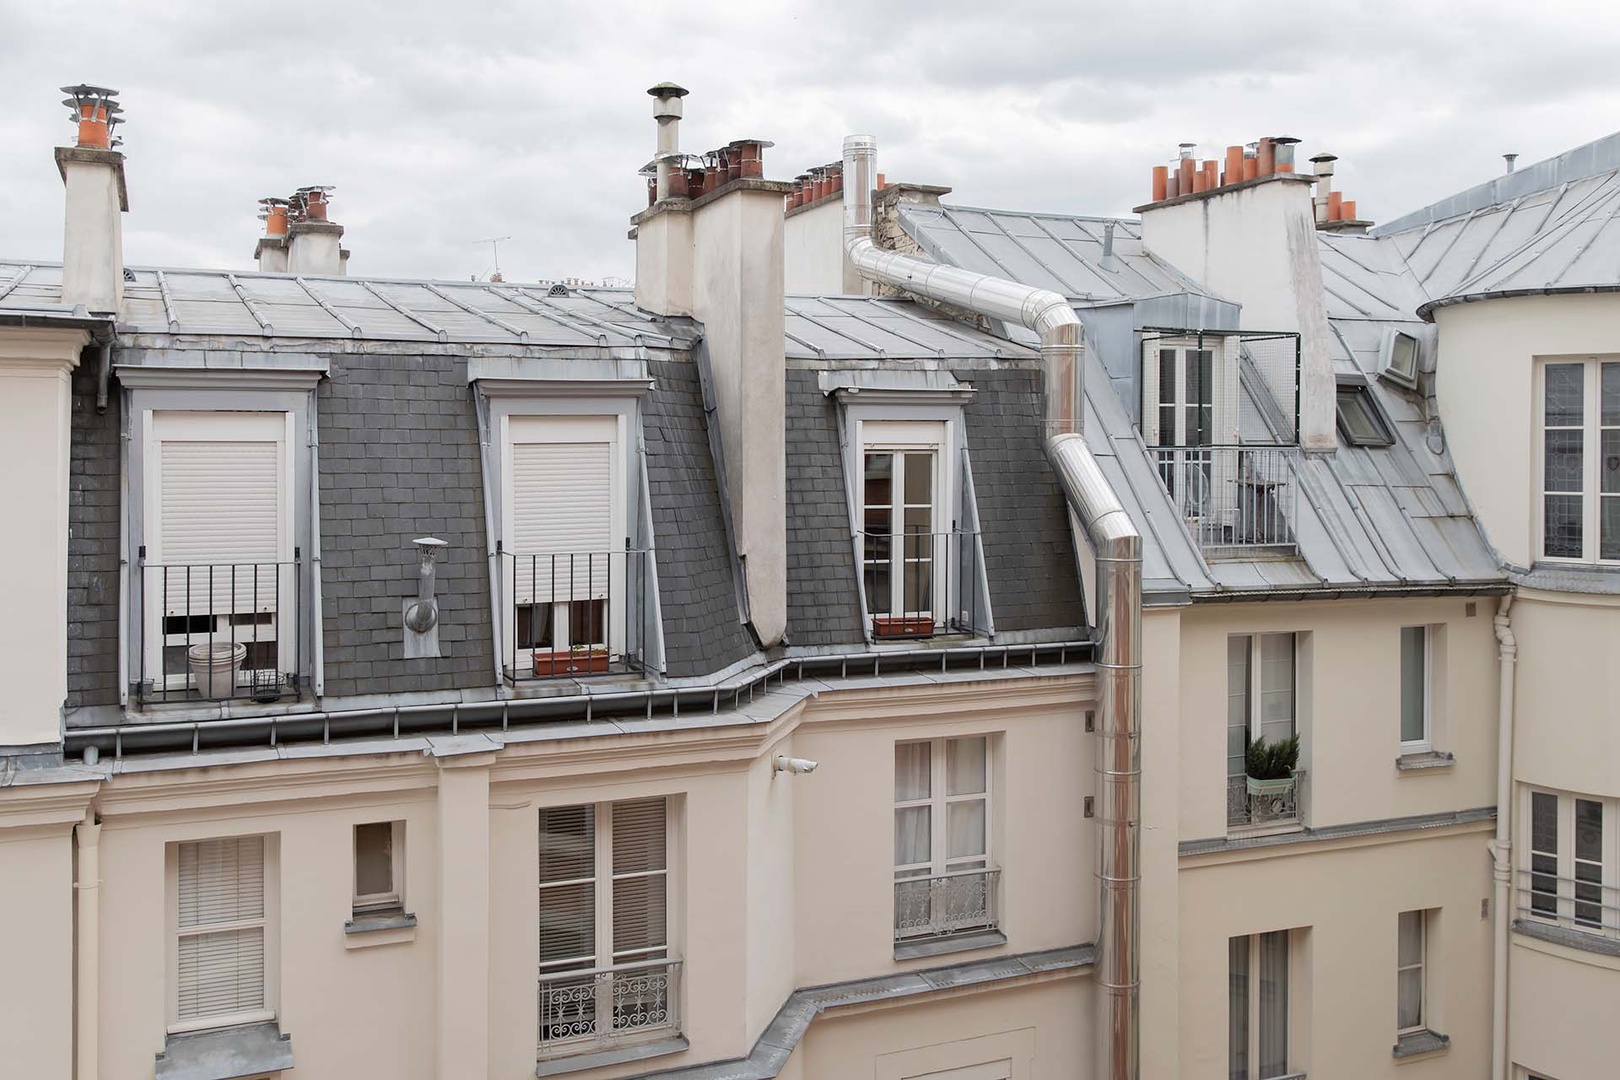 Charming courtyard views with Parisian mansard roofs.